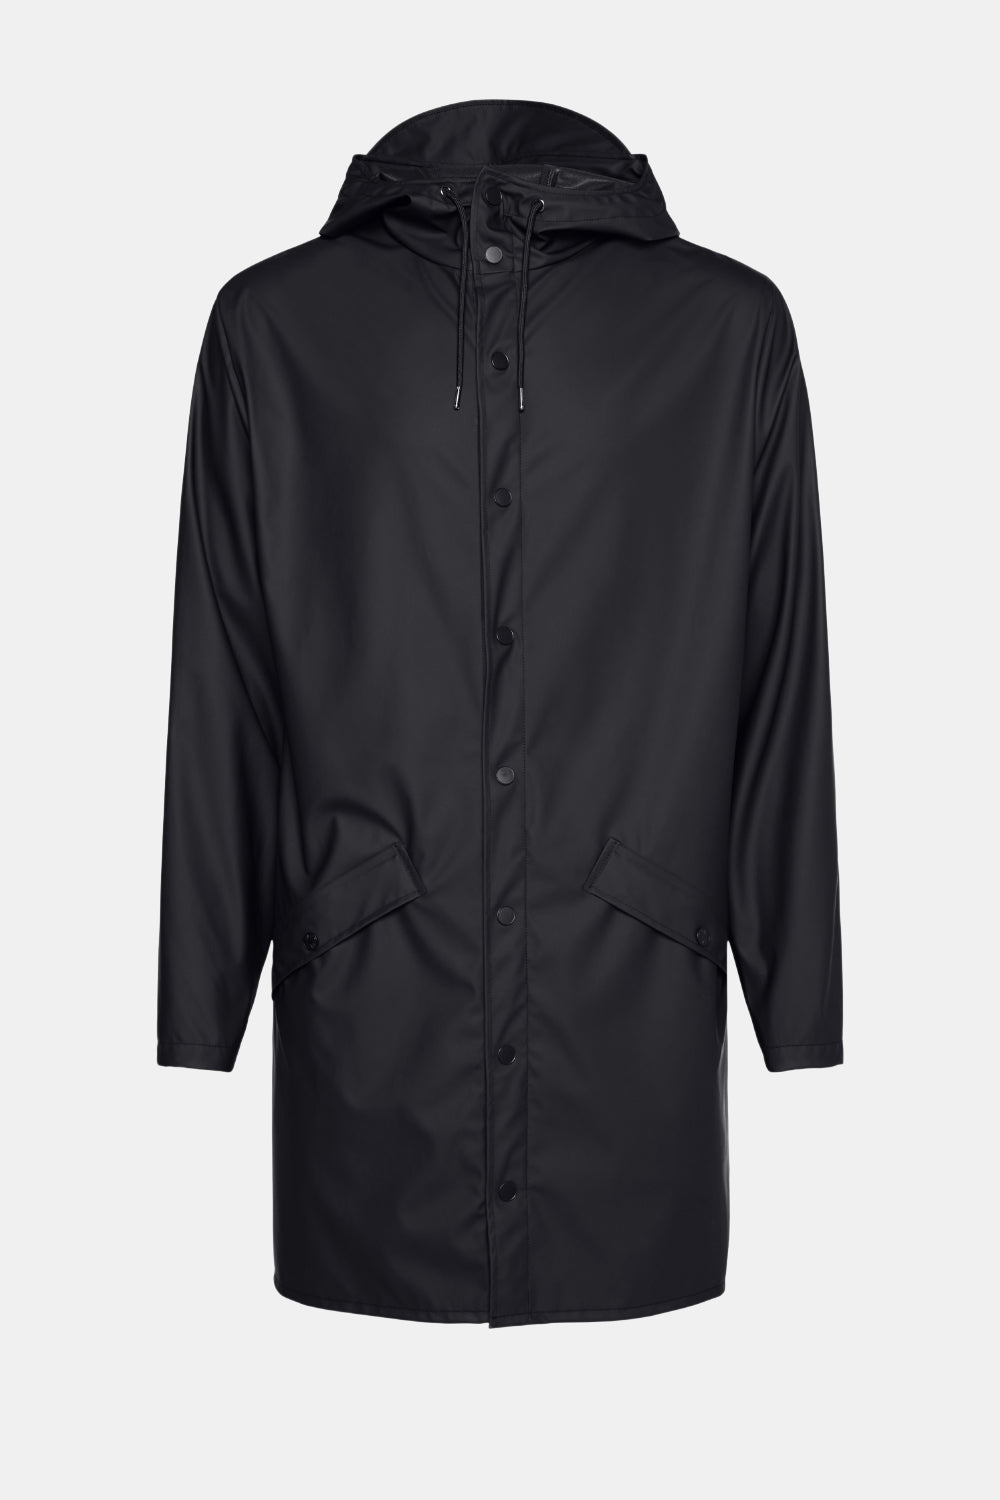 Rains Long Jacket (Black) | Number Six